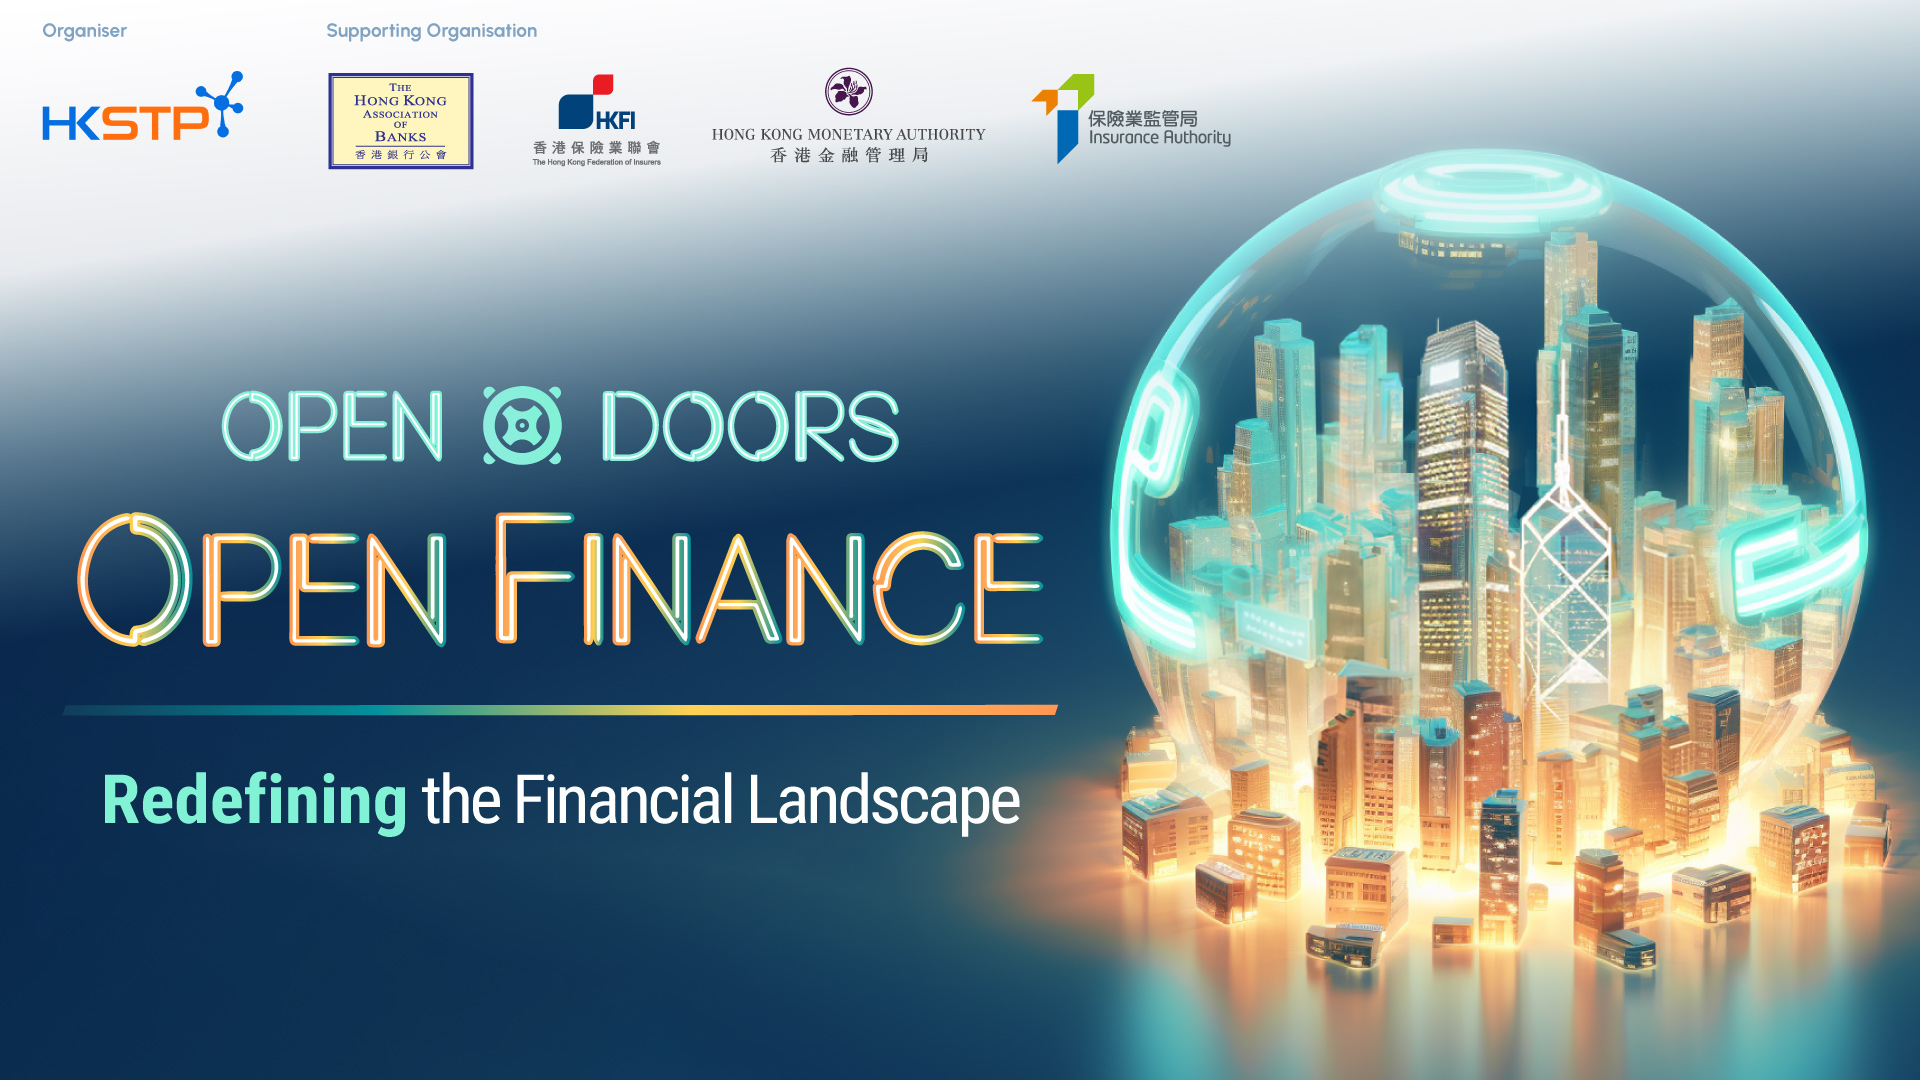 Open Doors Open Finance: Redefining the Financial Landscape